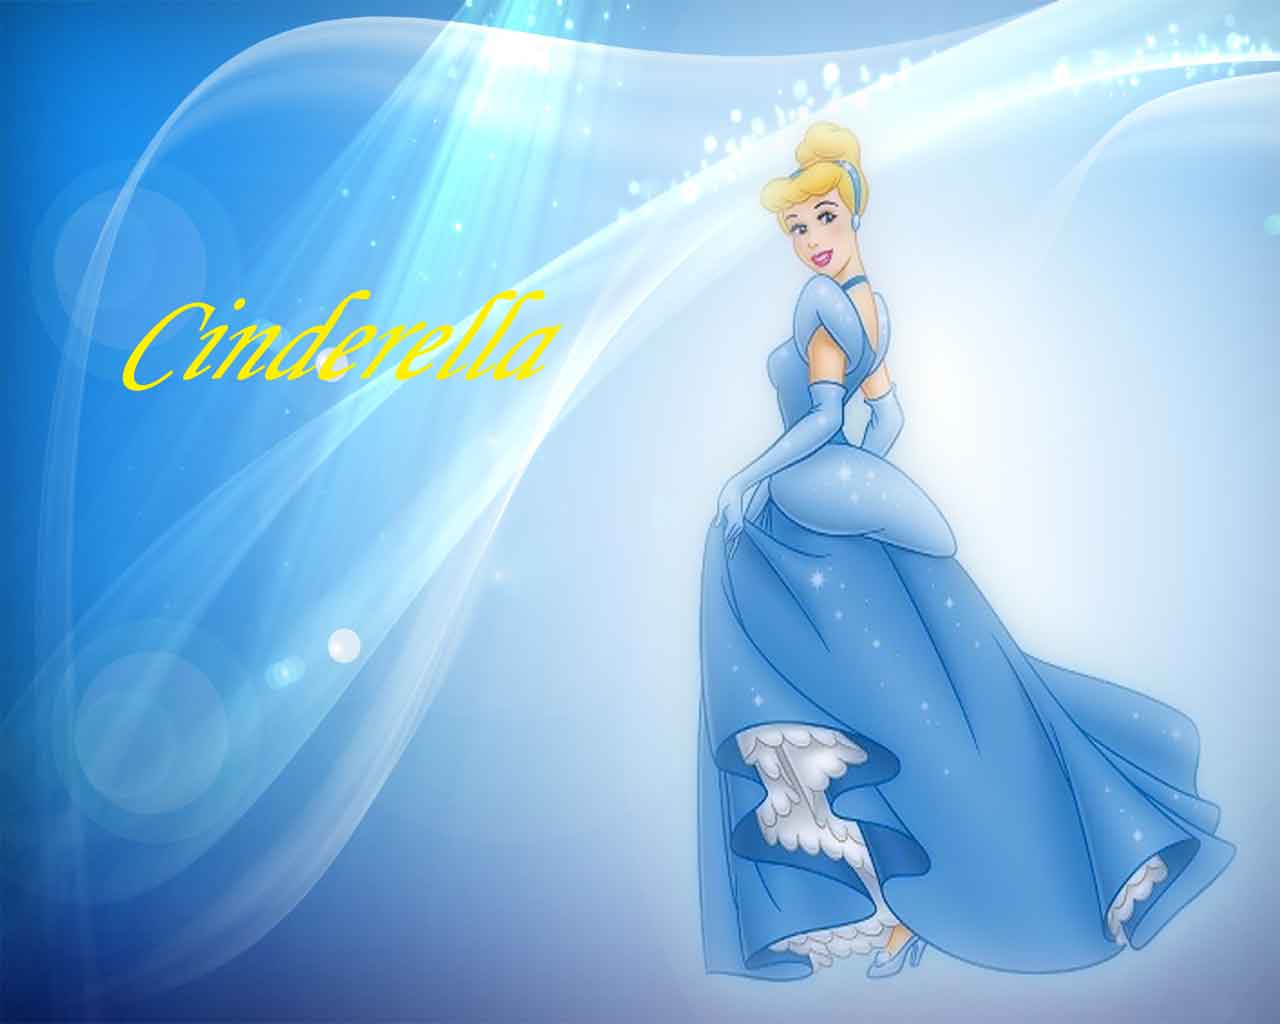 Cinderella Wallpaper by me - Disney Princess Wallpaper (38375442) - Fanpop